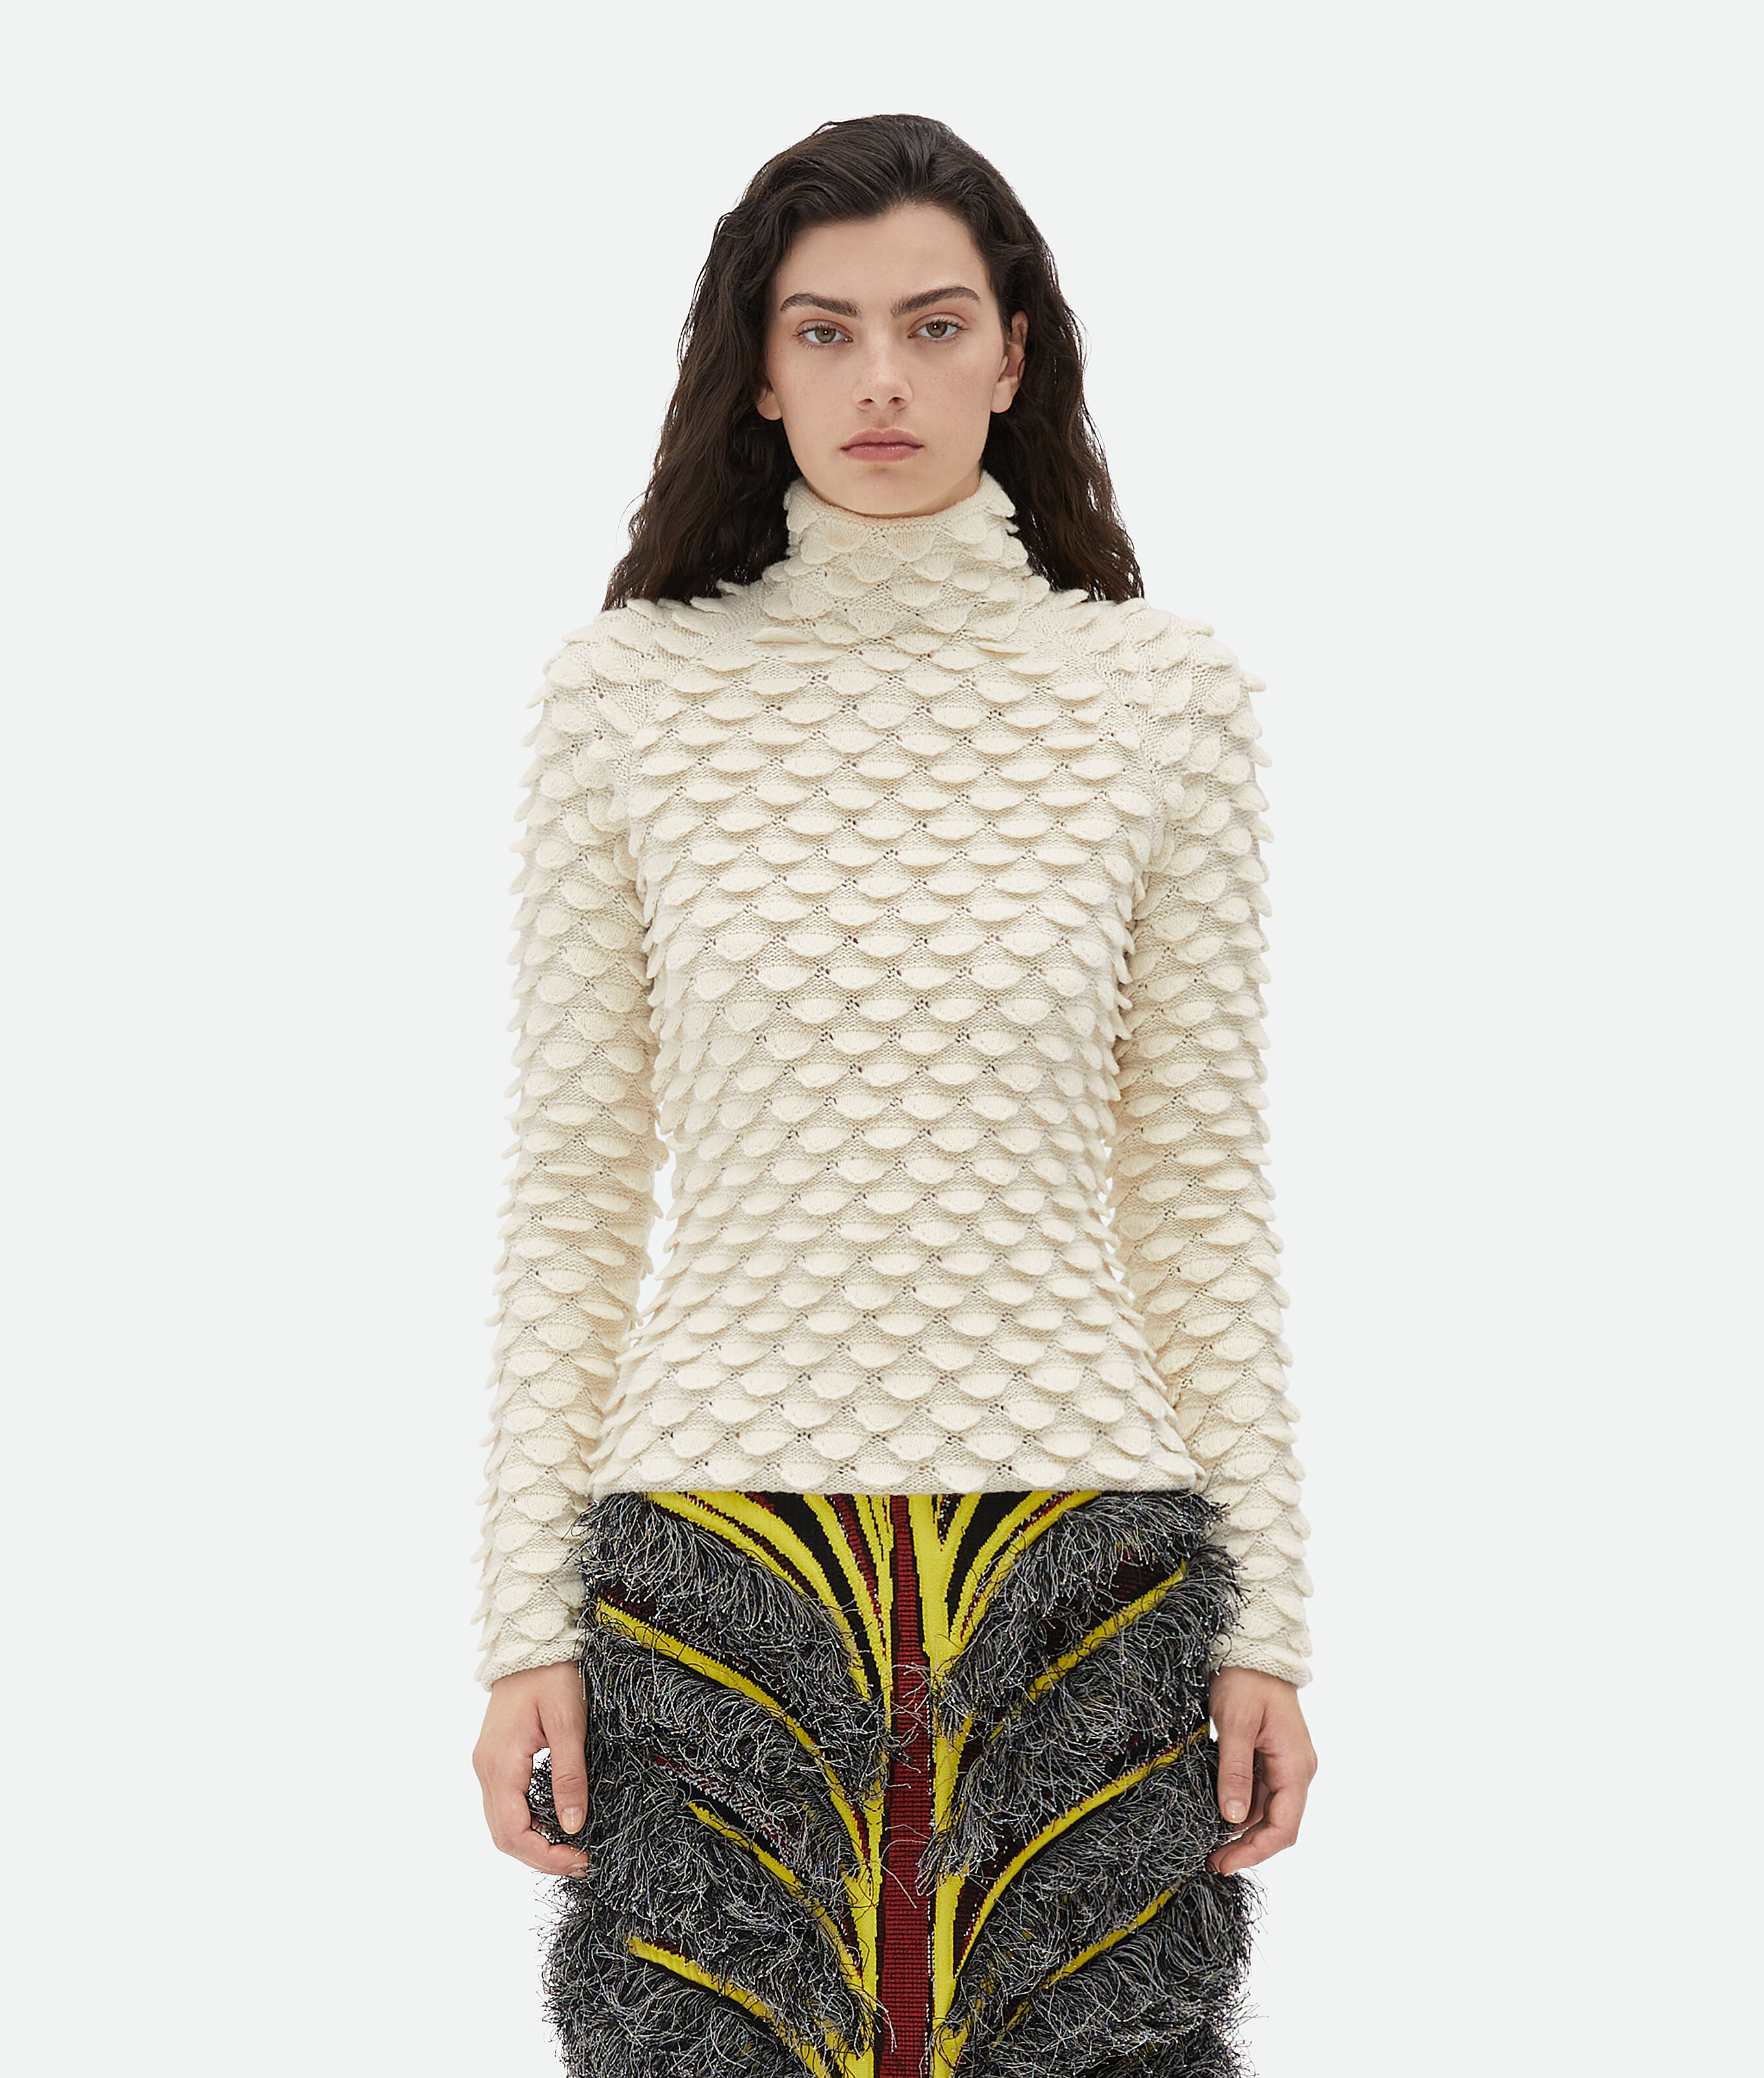 Bottega Veneta® Women's Fish Scale Wool Sweater in Dove. Shop online now.